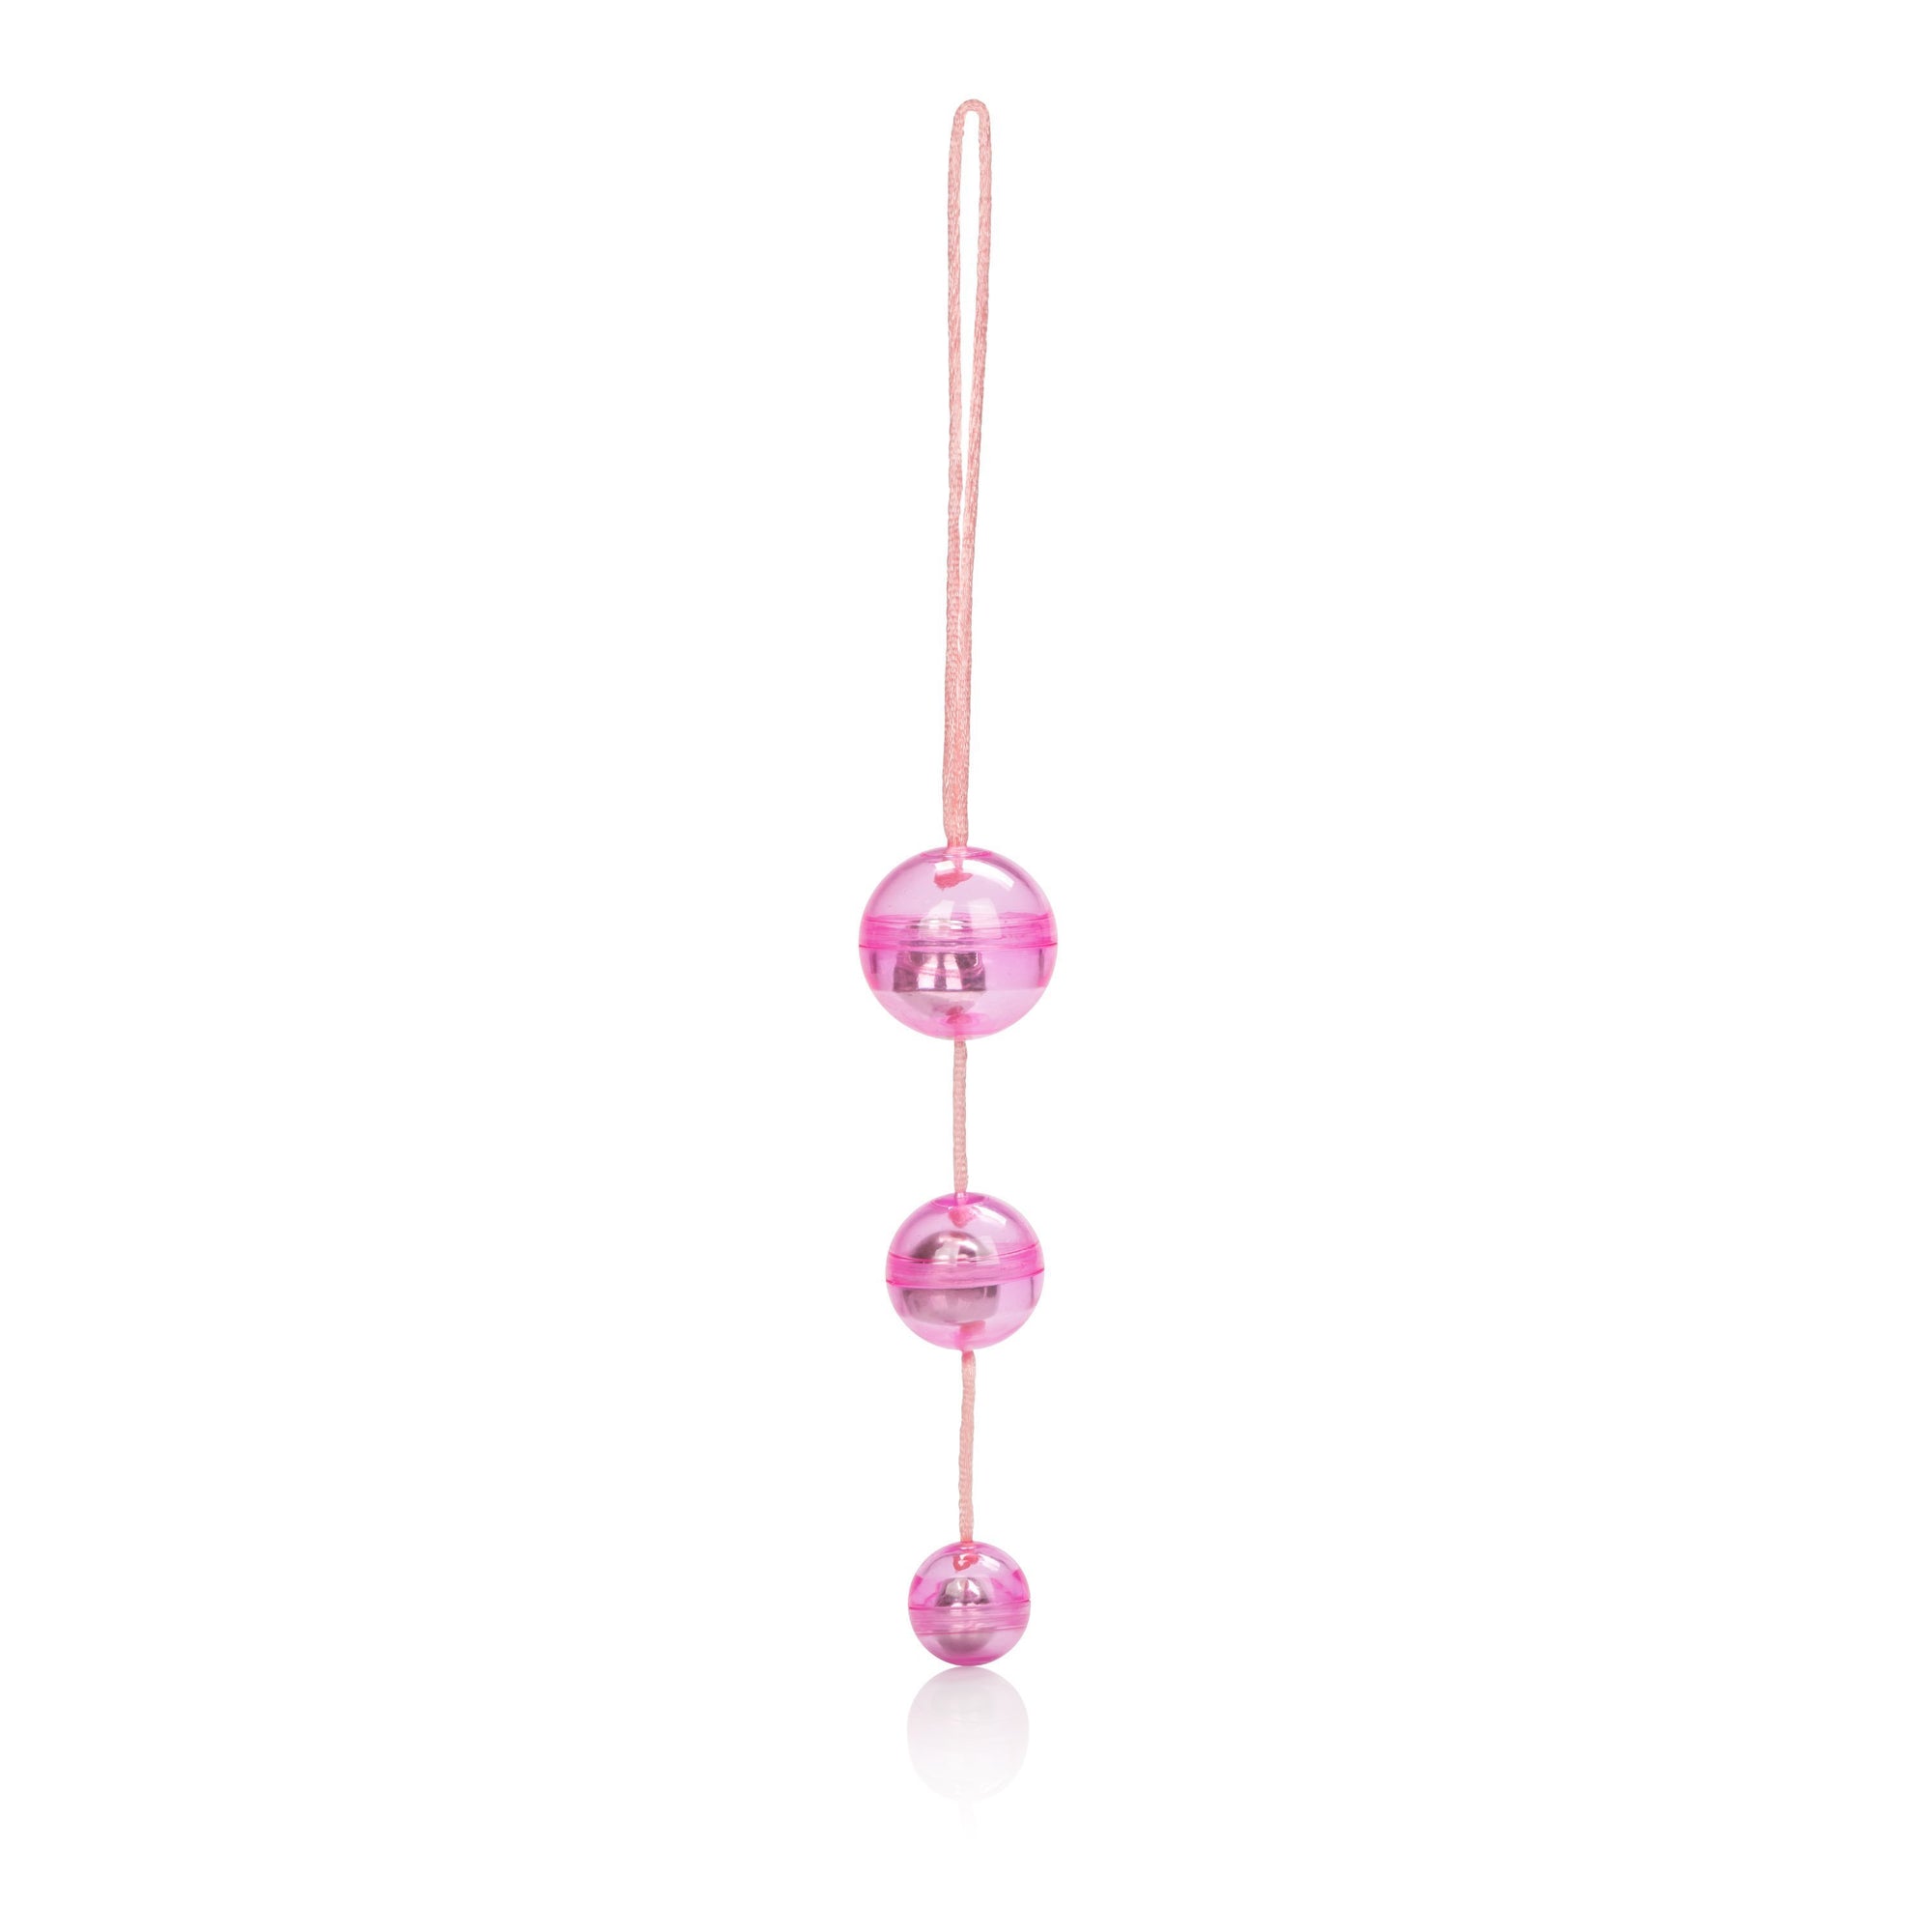 California Exotics - Graduated Orgasm Weighted Kegel Balls (Pink) Kegel Balls (Non Vibration) Singapore